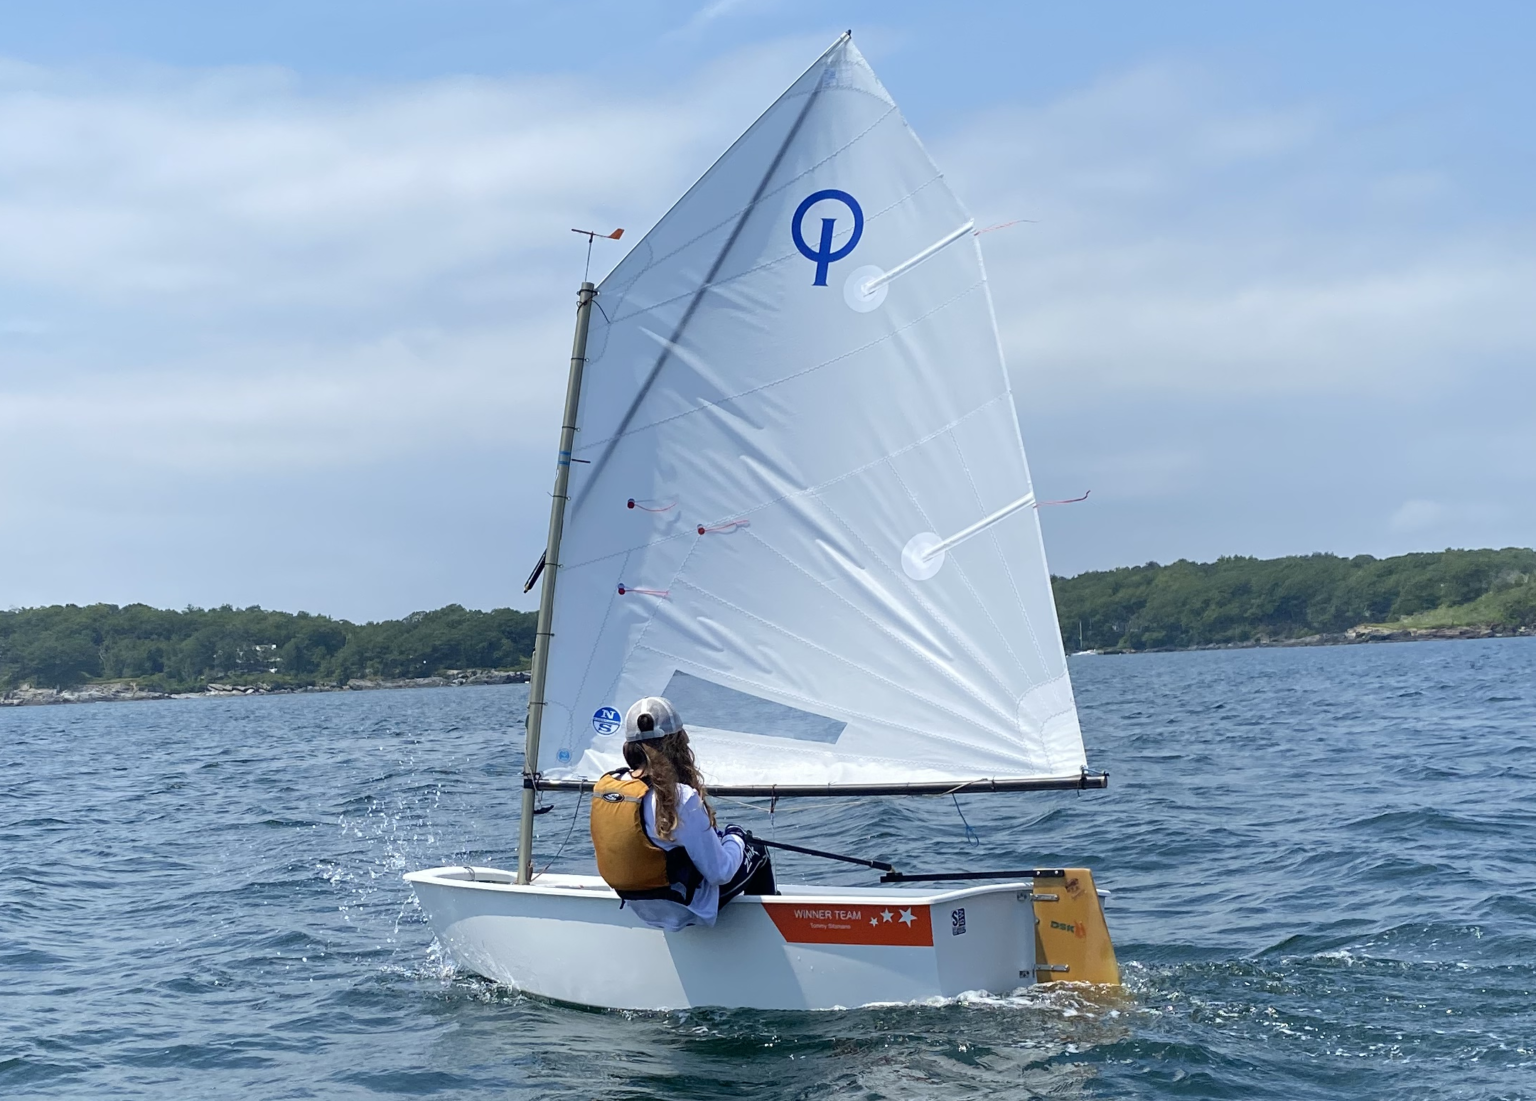 the optimist sailboat